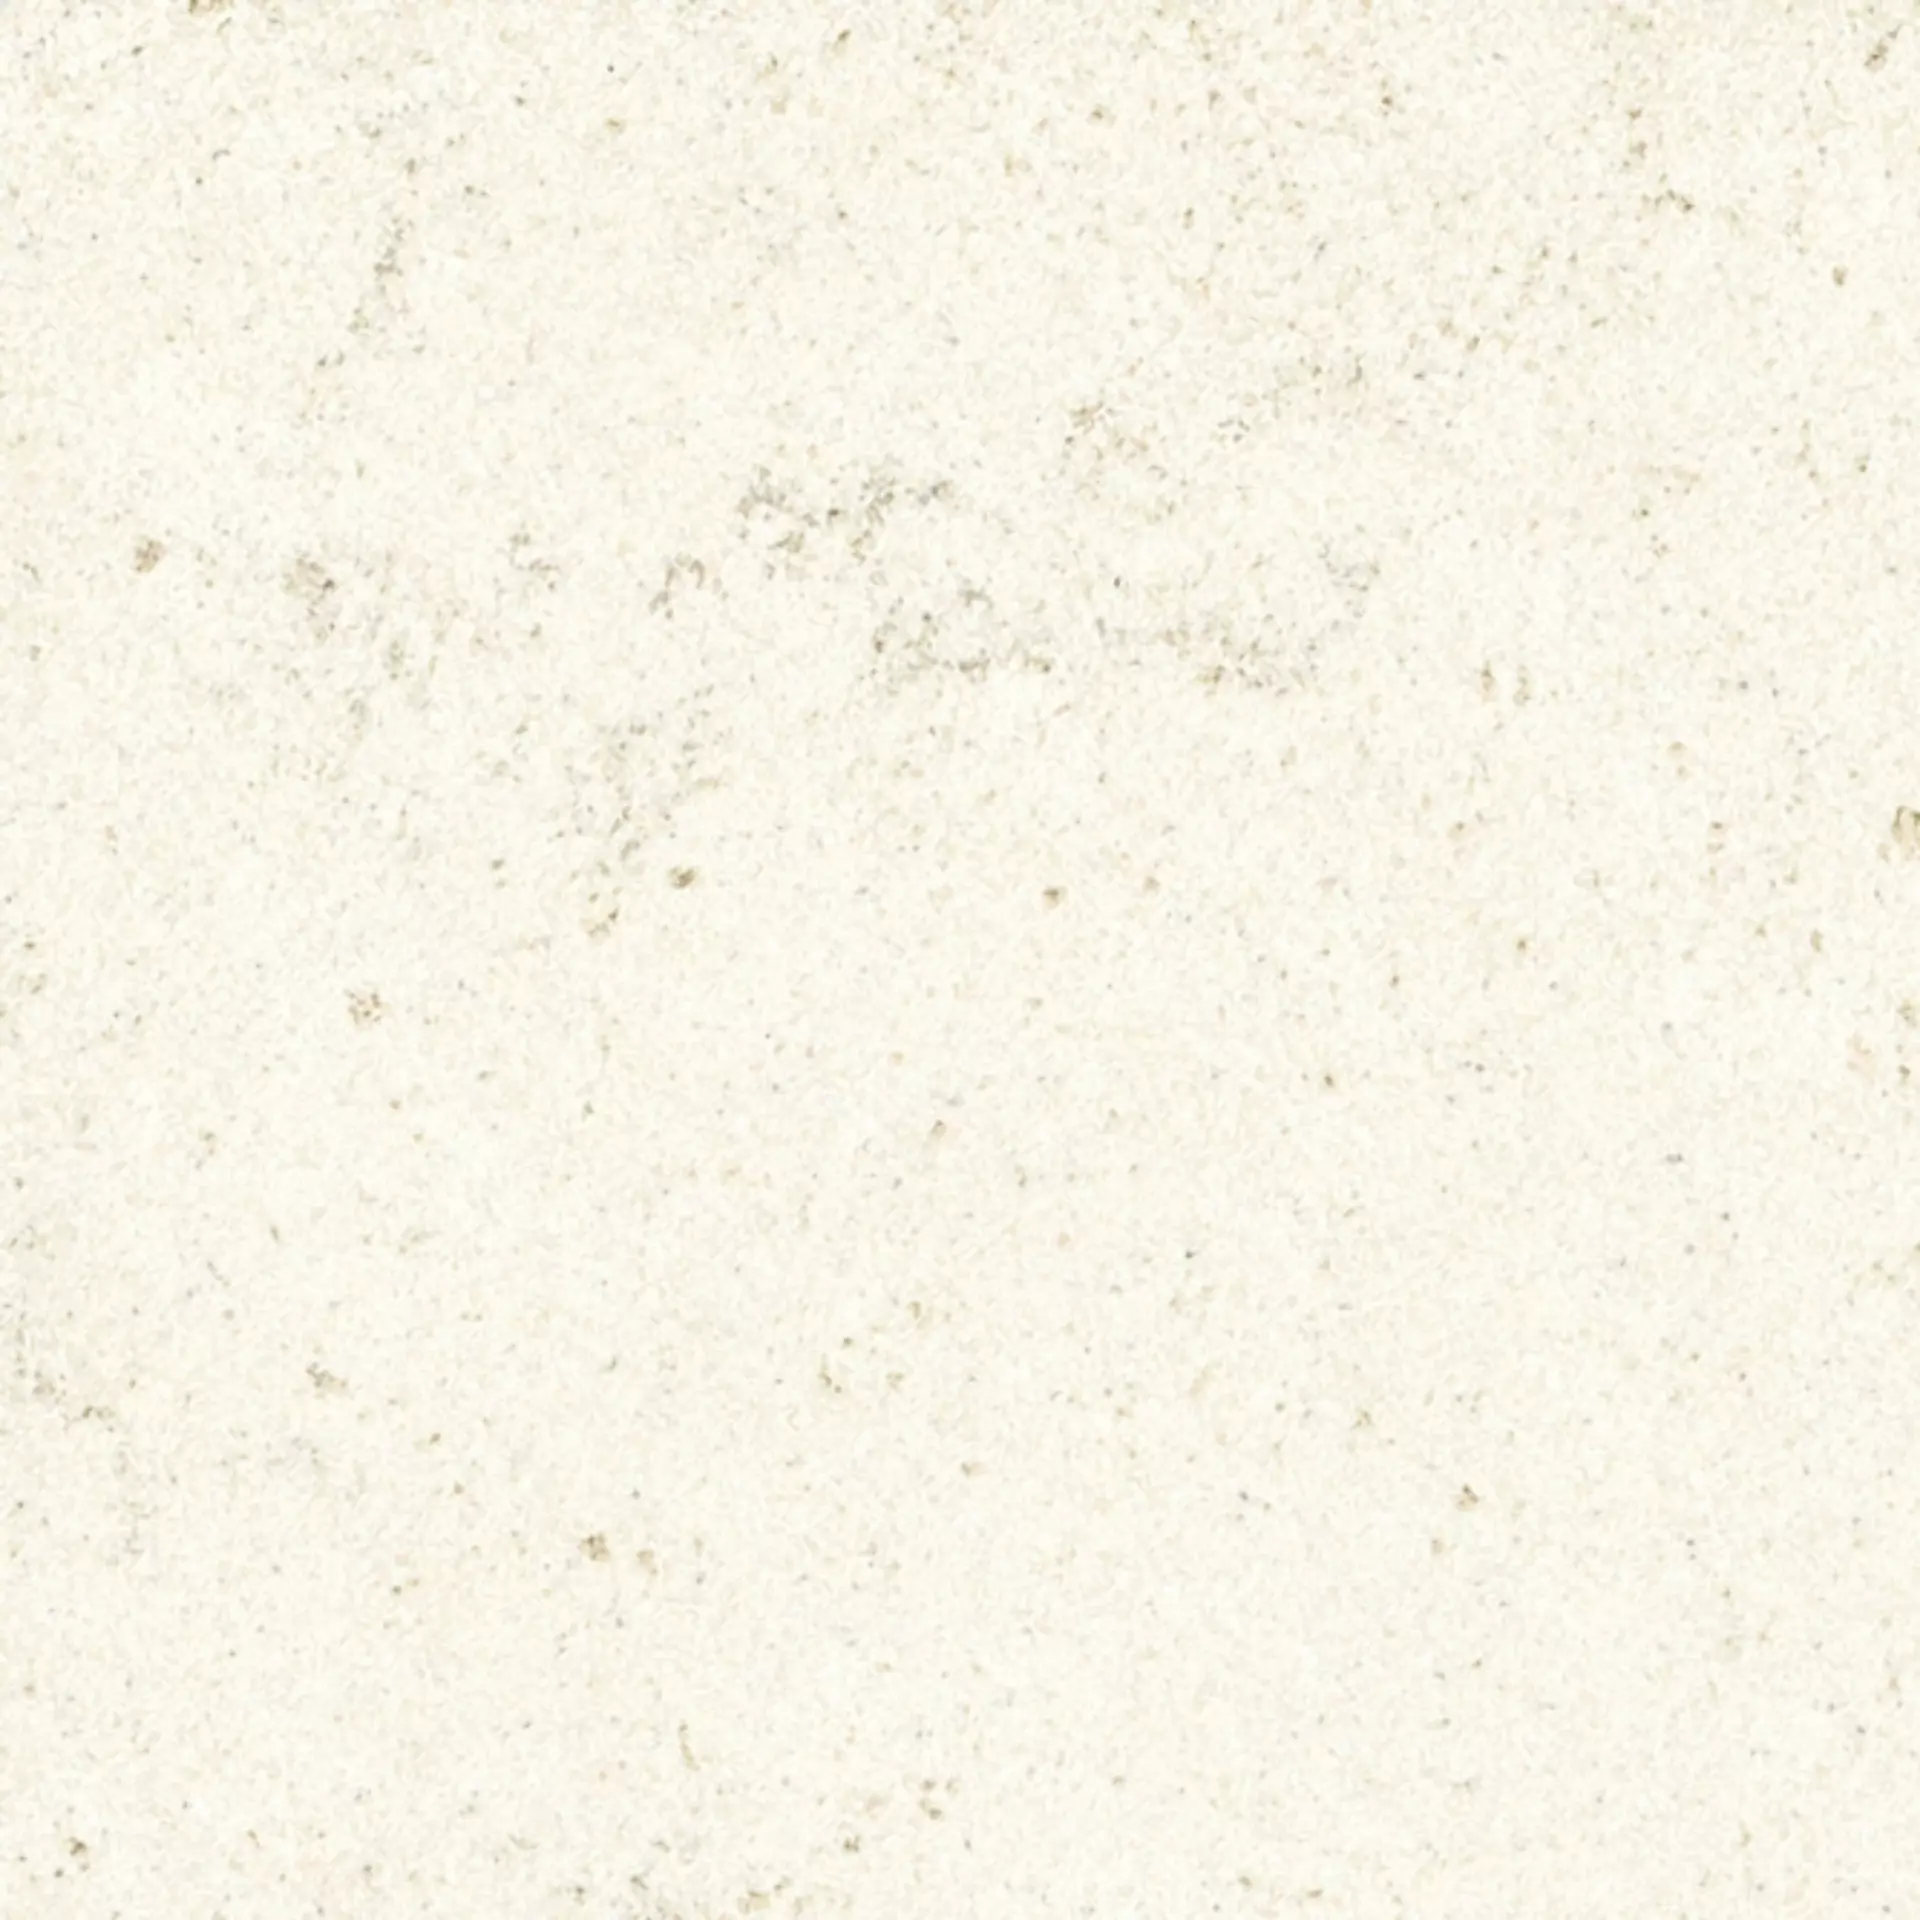 Cottodeste Kerlite Buxy Corail Blanc Naturale Protect EG8BU55 100x100cm rectified 3,5mm